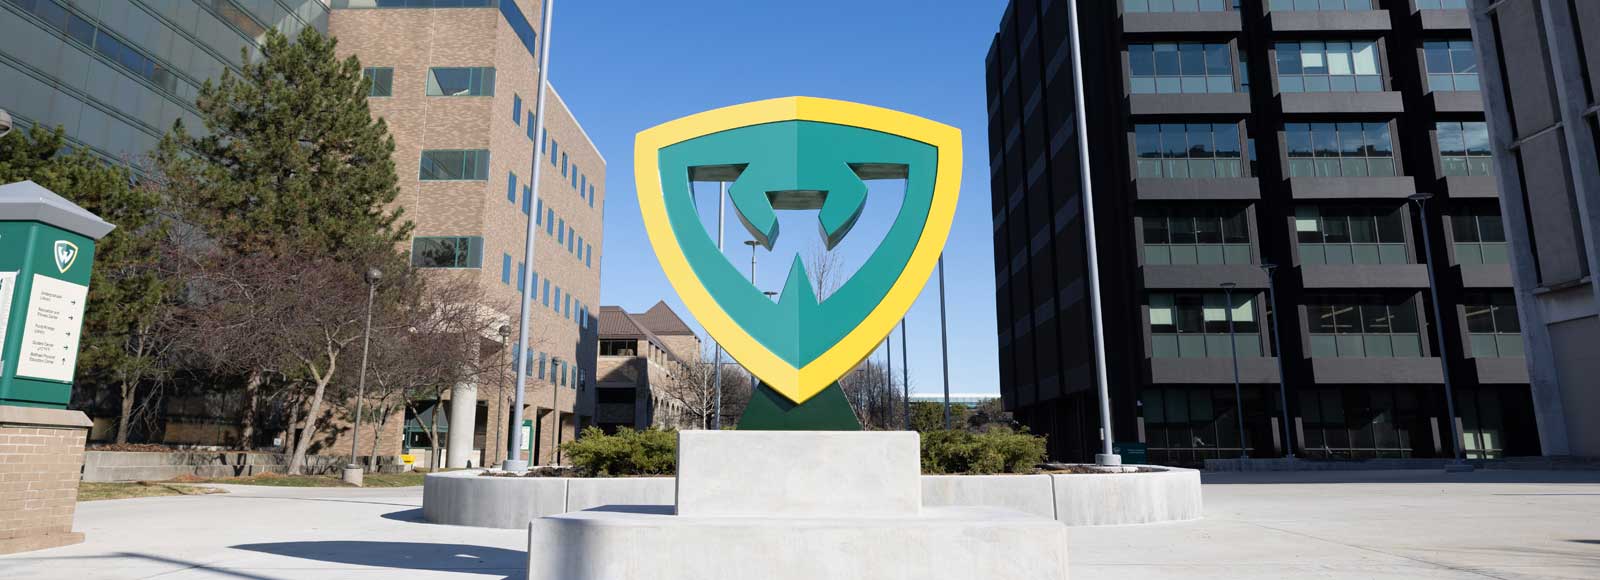 Sculpture of WSU logo on campus